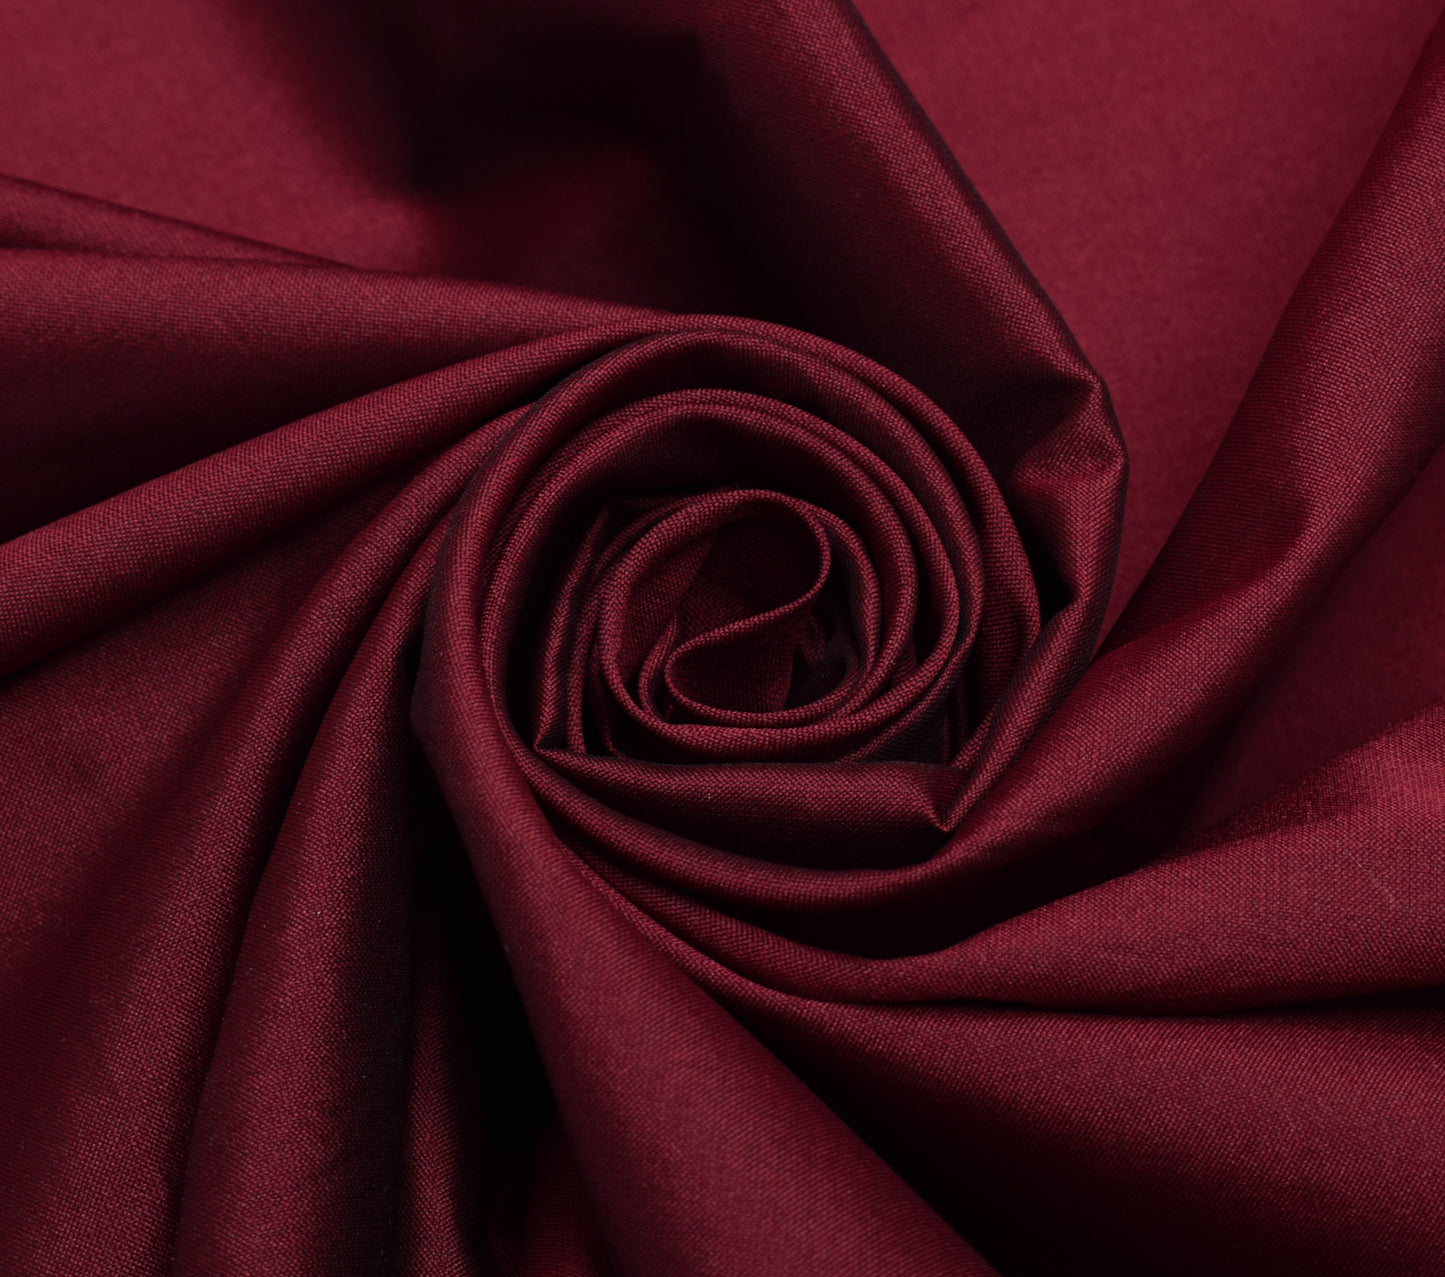 Sushila Vintage Maroon Sari Remnant Scrap Multi Purpose Blend Silk Craft Fabric